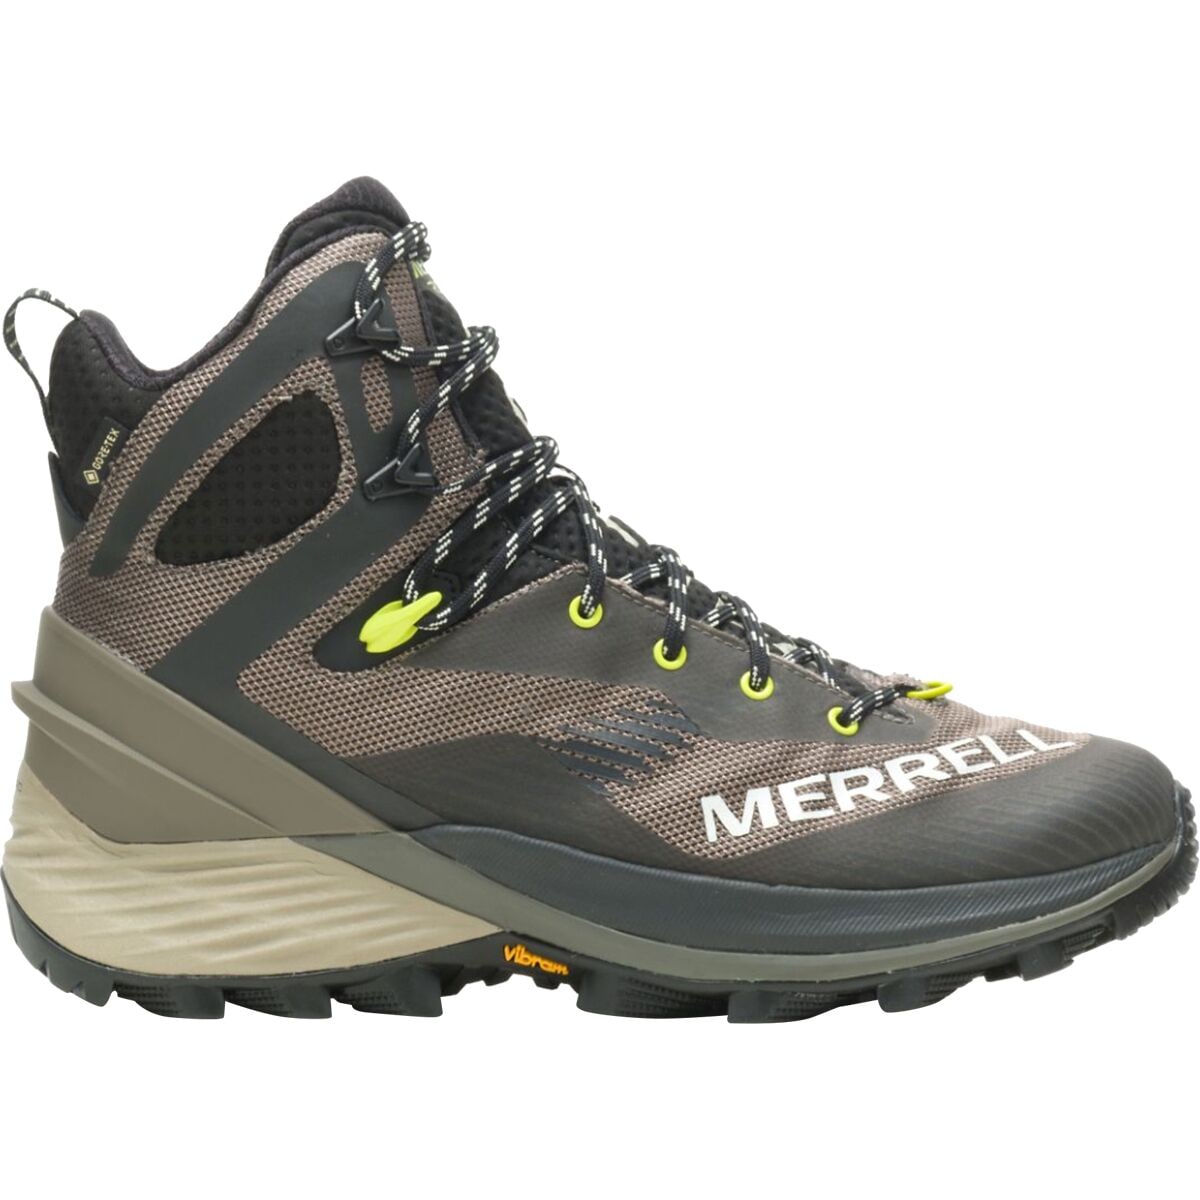 Merrell Rogue Hiker Mid GTX Boot - Men's